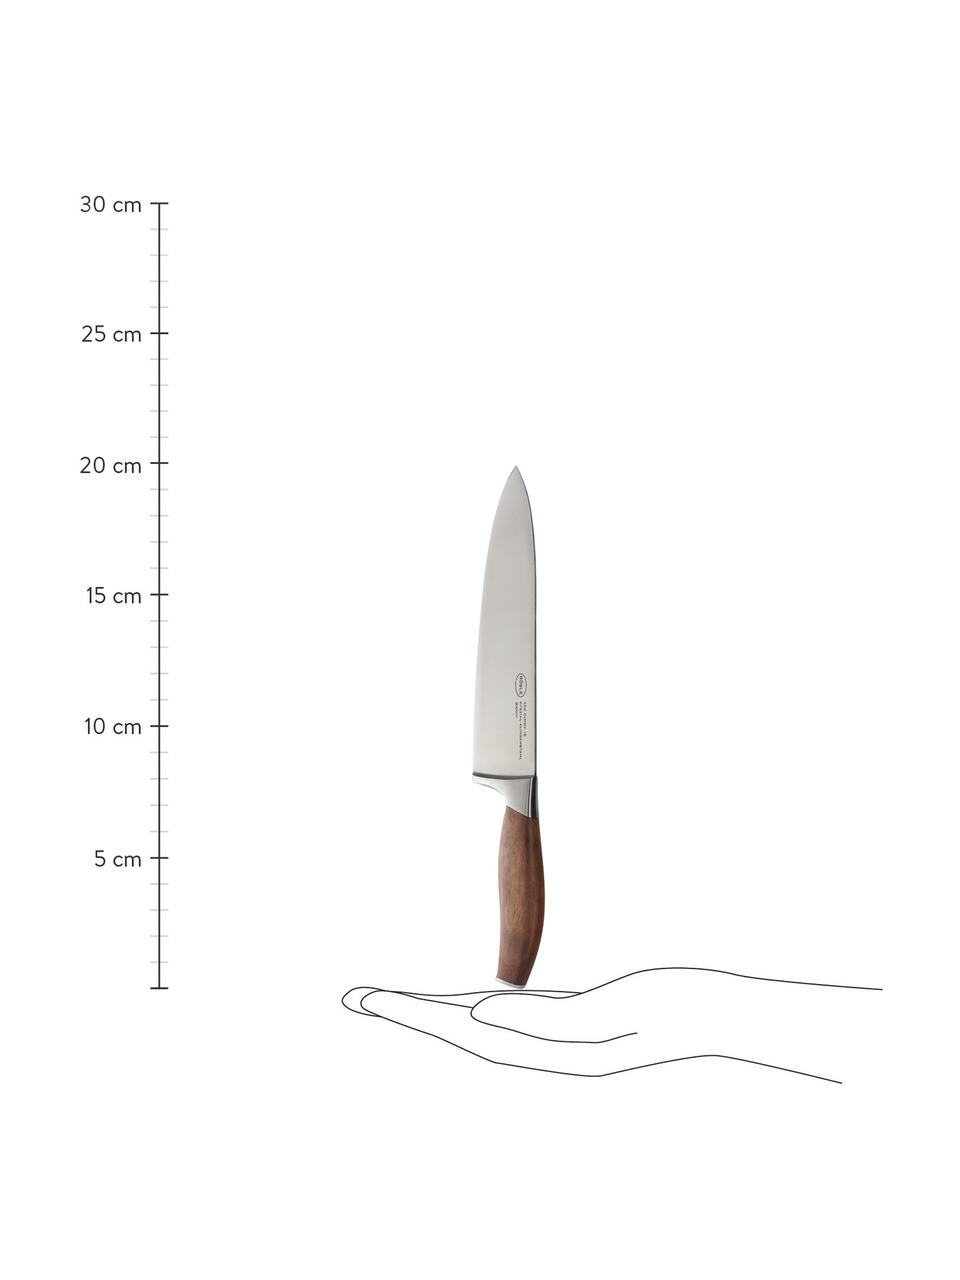 Bloque de cuchillos Passion, 7 pzas., Plateado, marrón, Set de diferentes tamaños